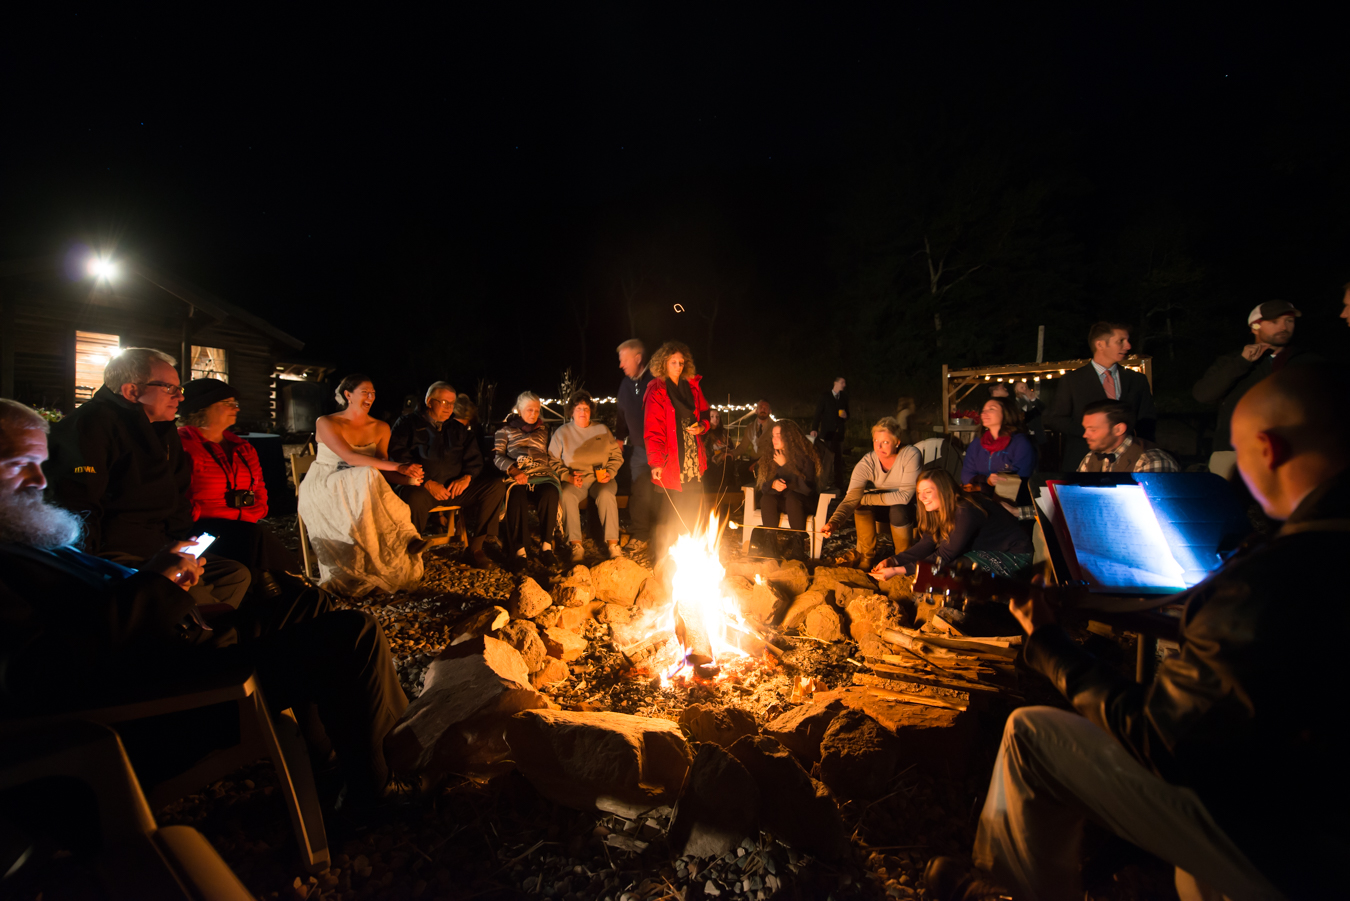 Bearcat-Stables-Wedding-Reception-Campfire-Night-Photo.jpg